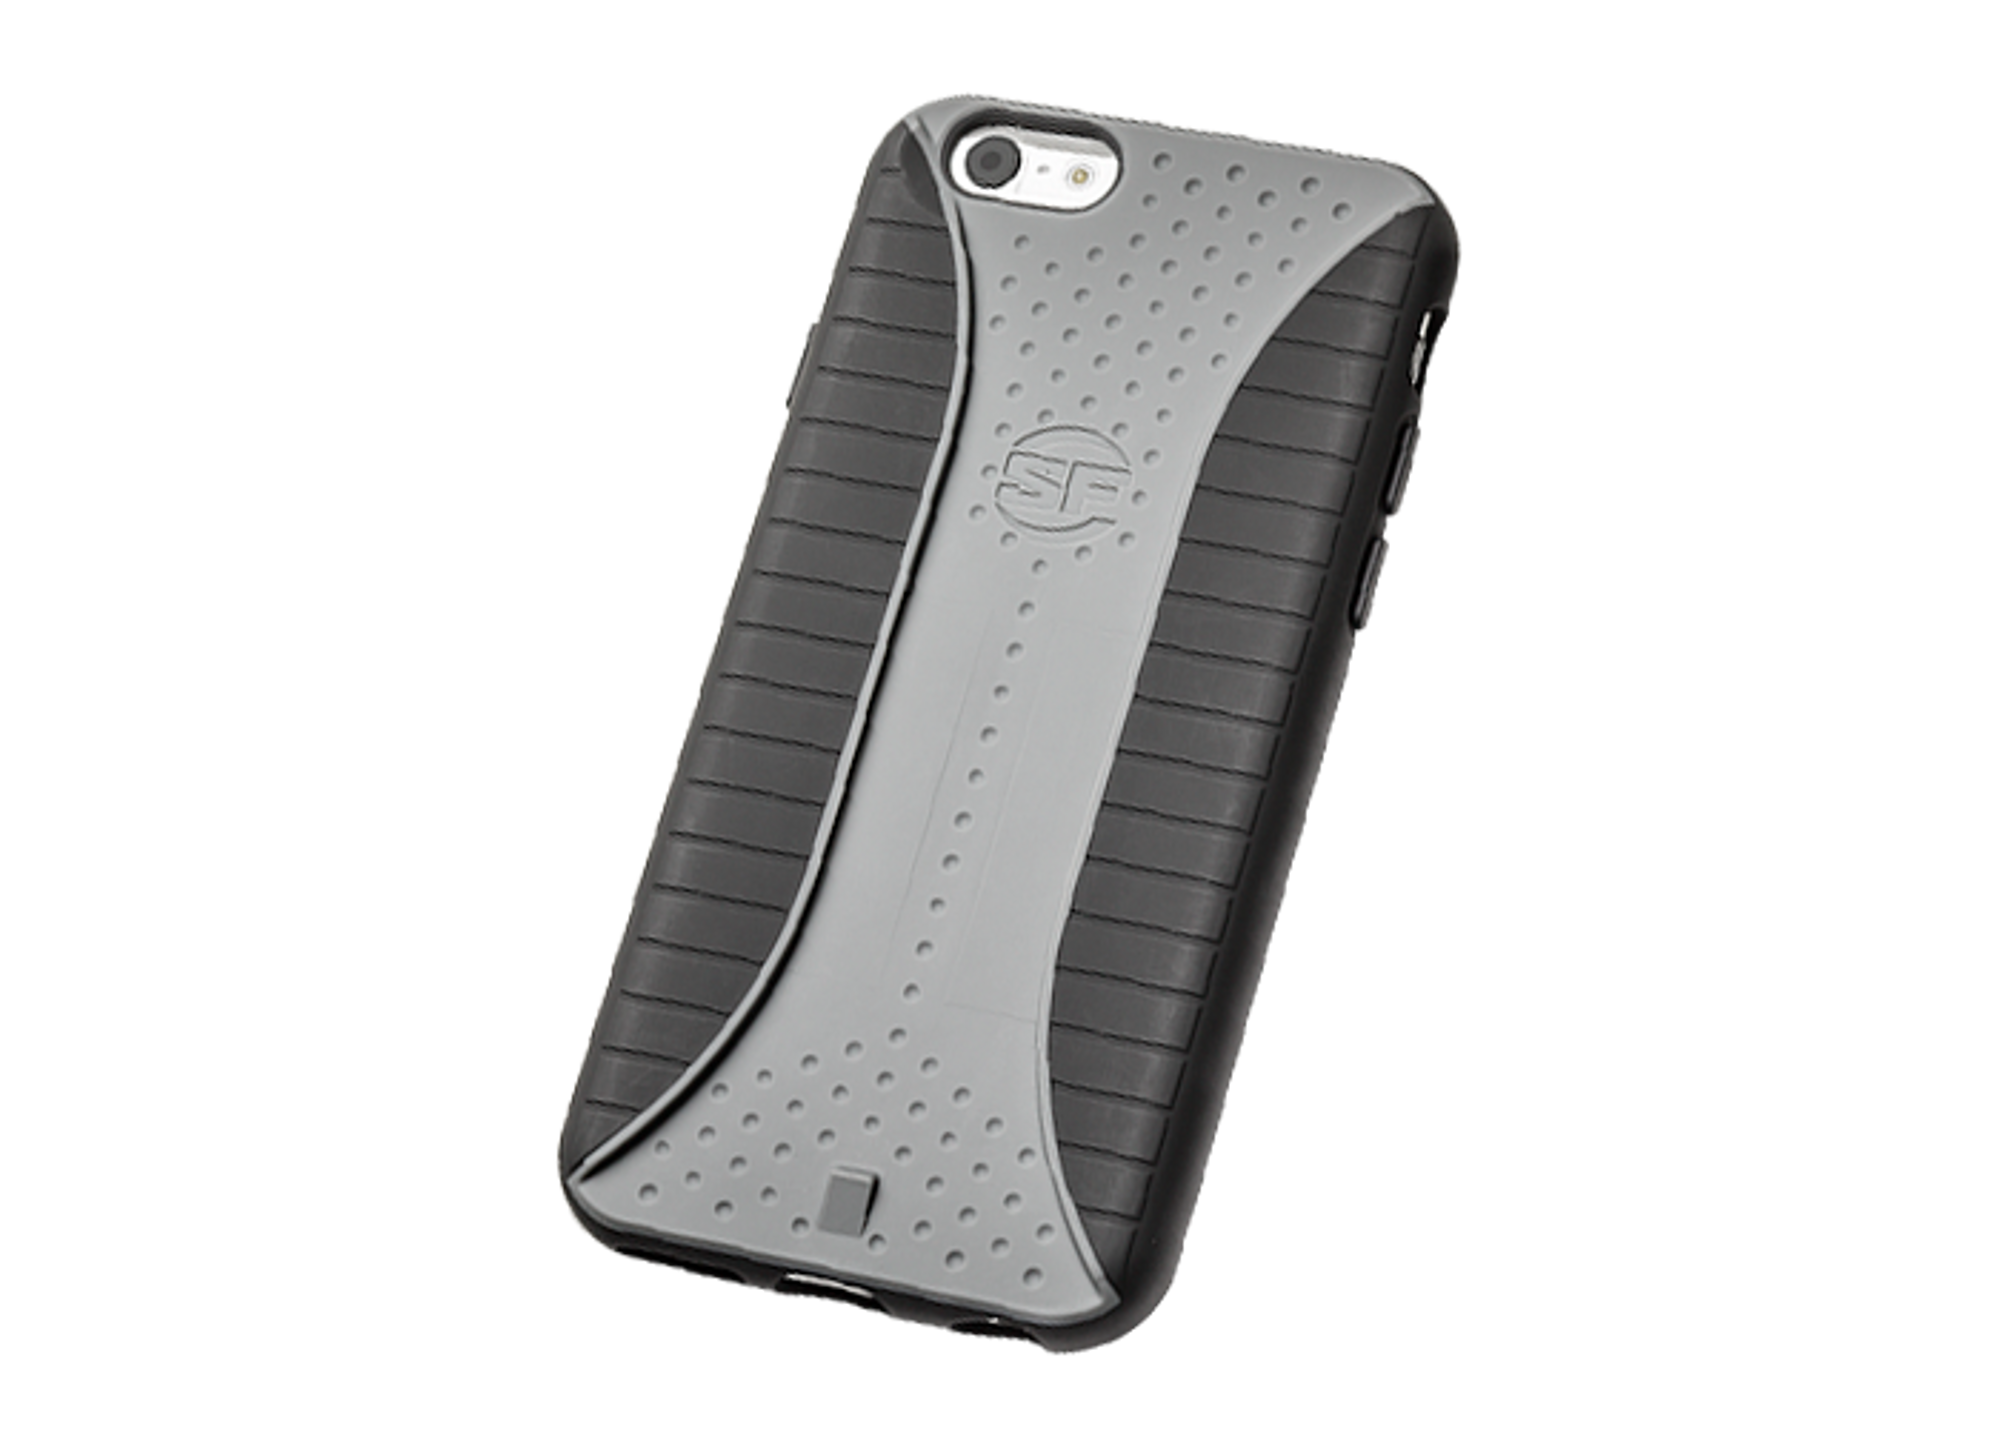 Surefire Phone Case for iPhone 6/6s - Black/Grey